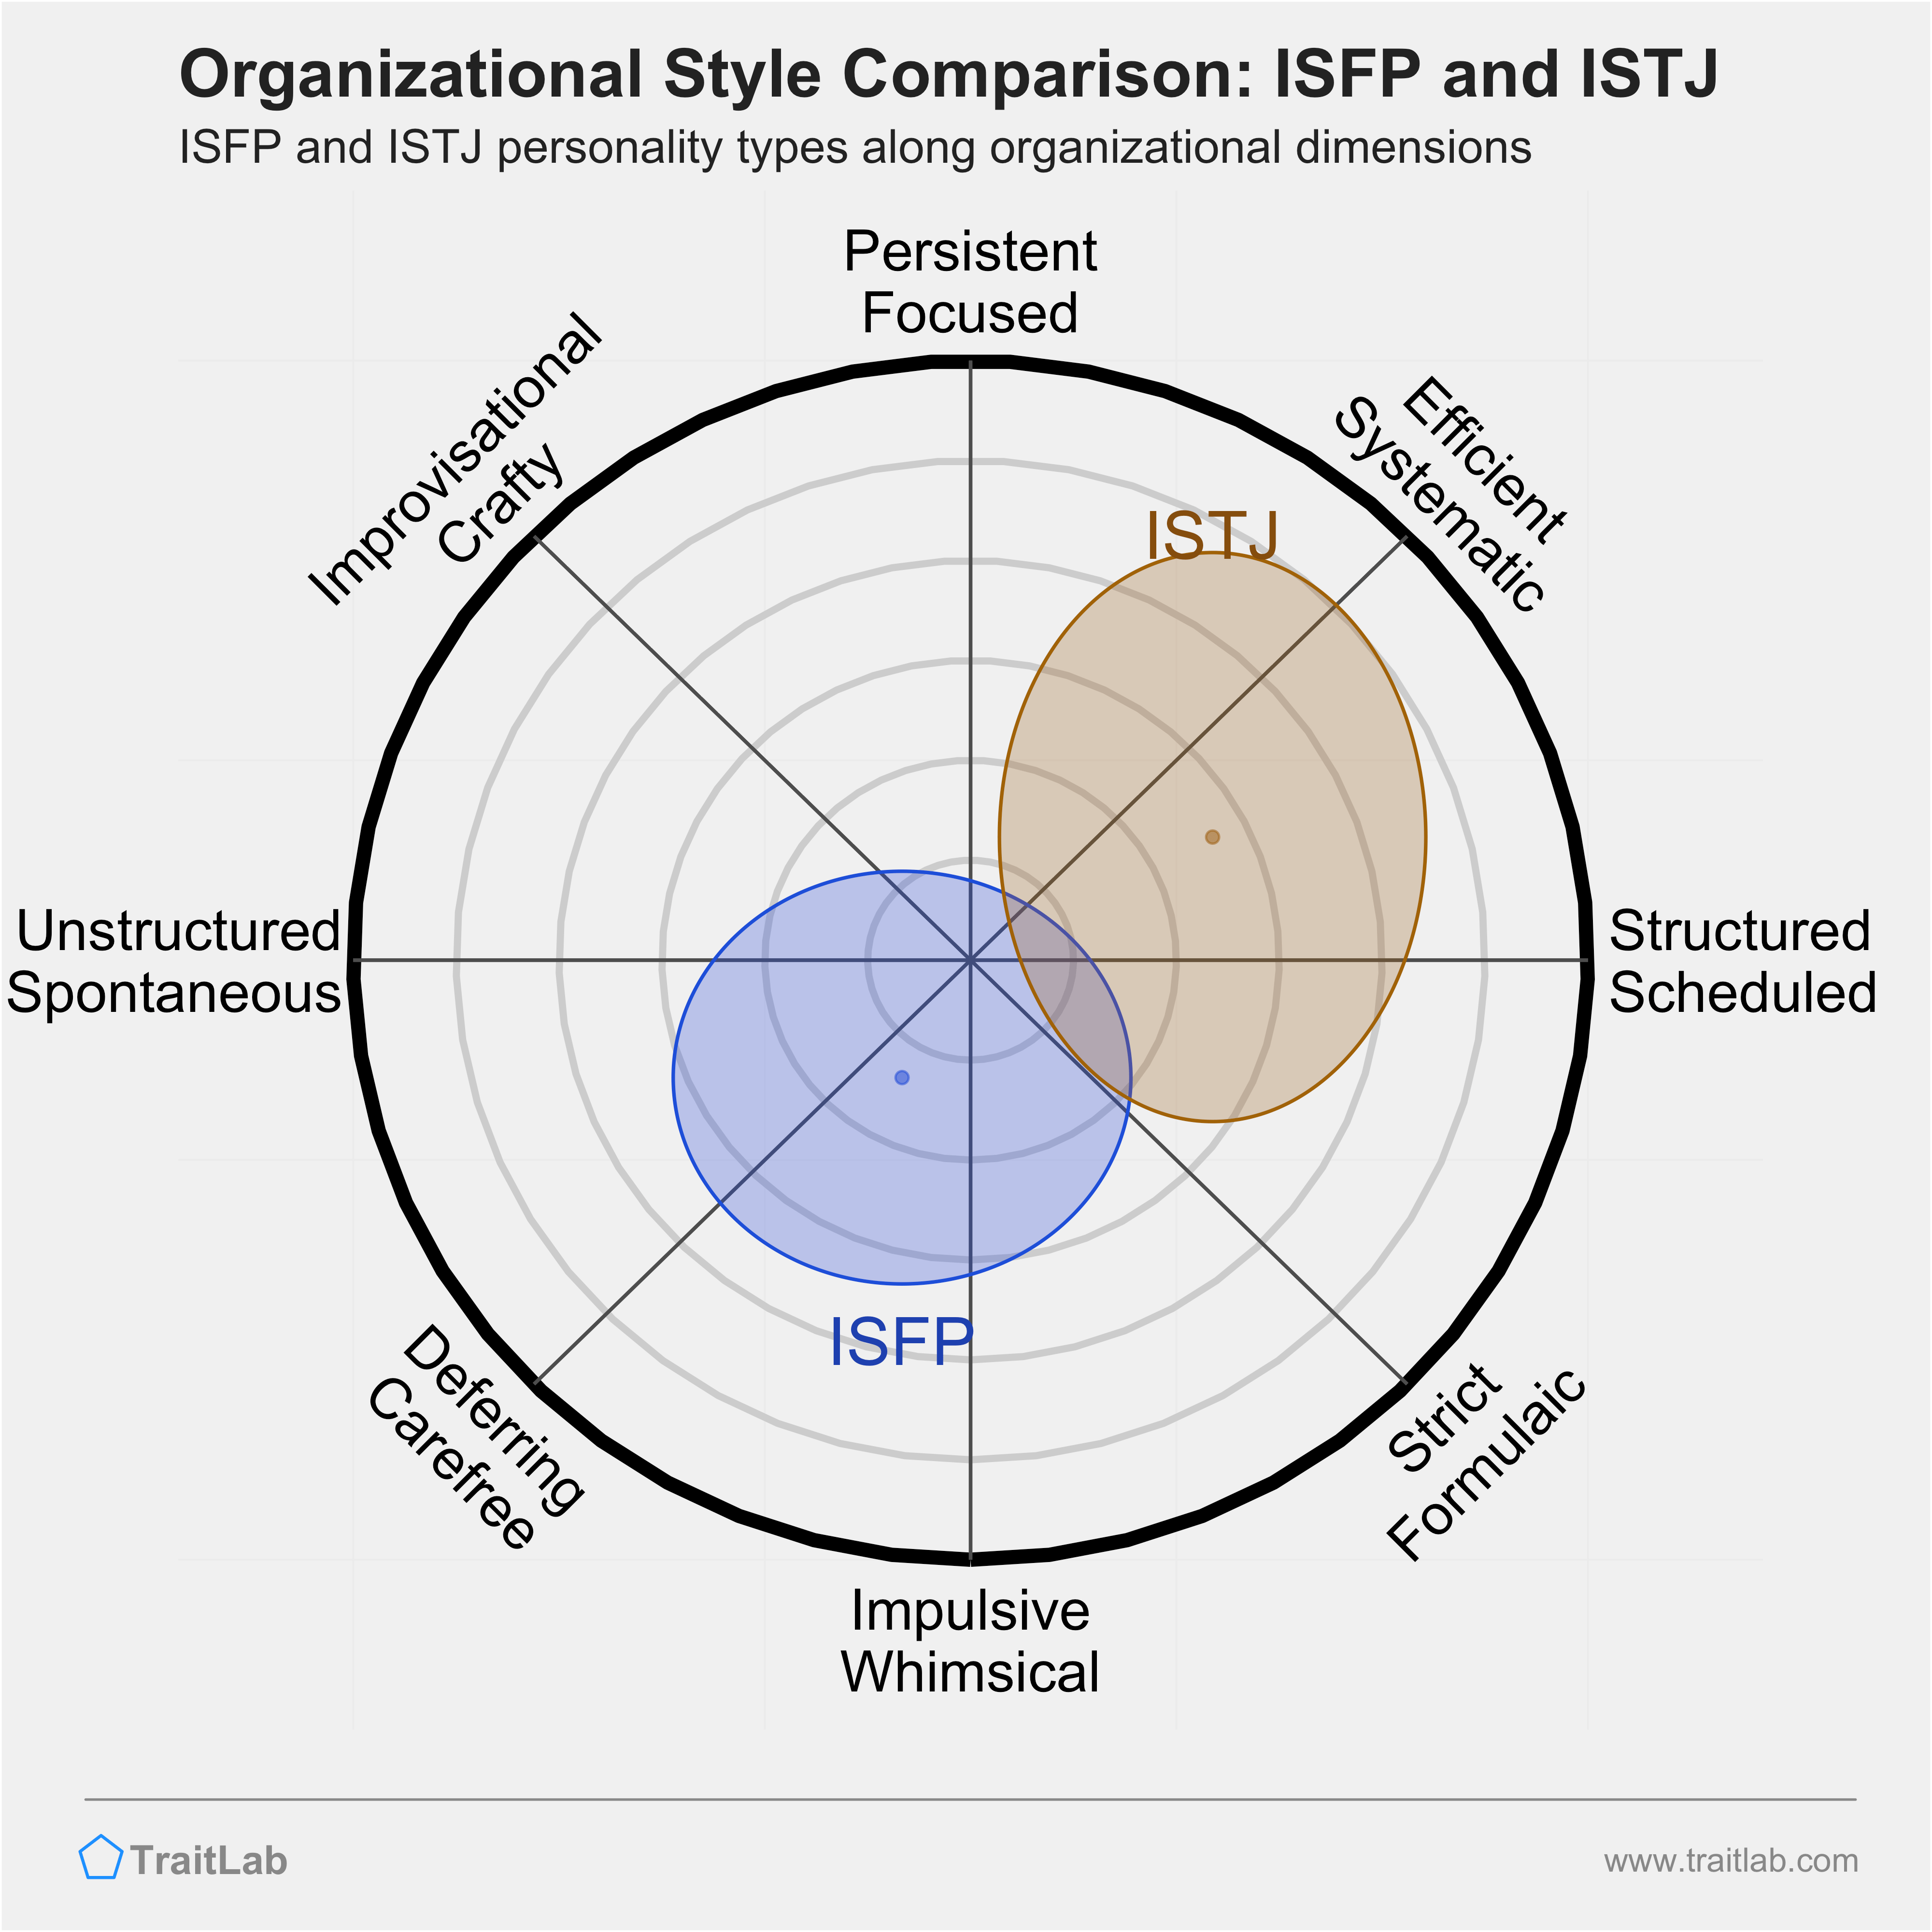 ISFP and ISTJ comparison across organizational dimensions